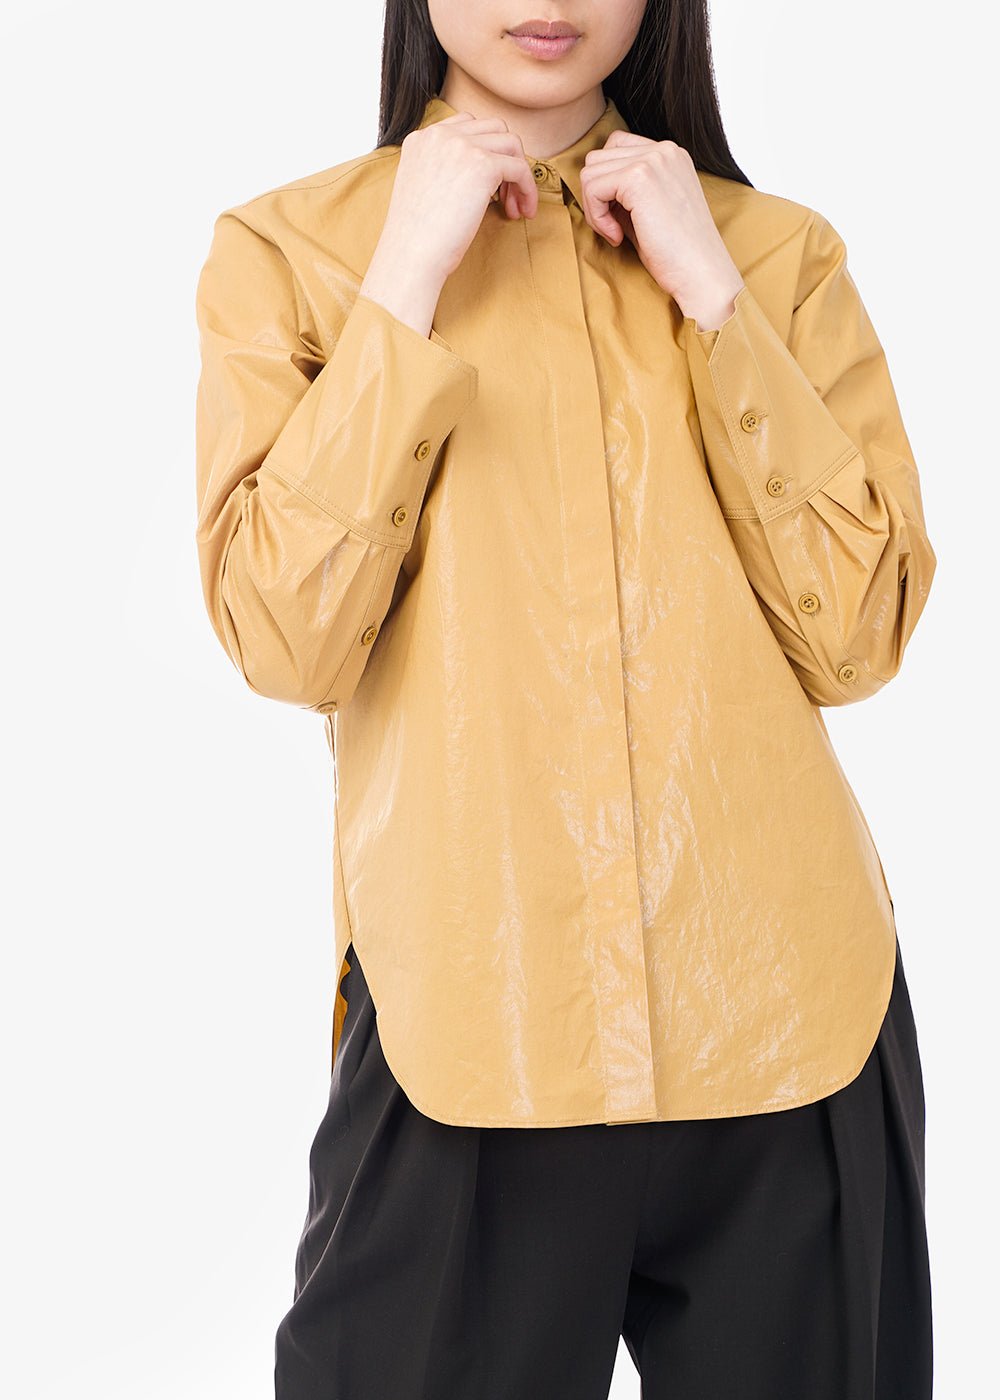 WNDERKAMMER Glossy Basic Shirt — Shop sustainable fashion and slow fashion at New Classics Studios